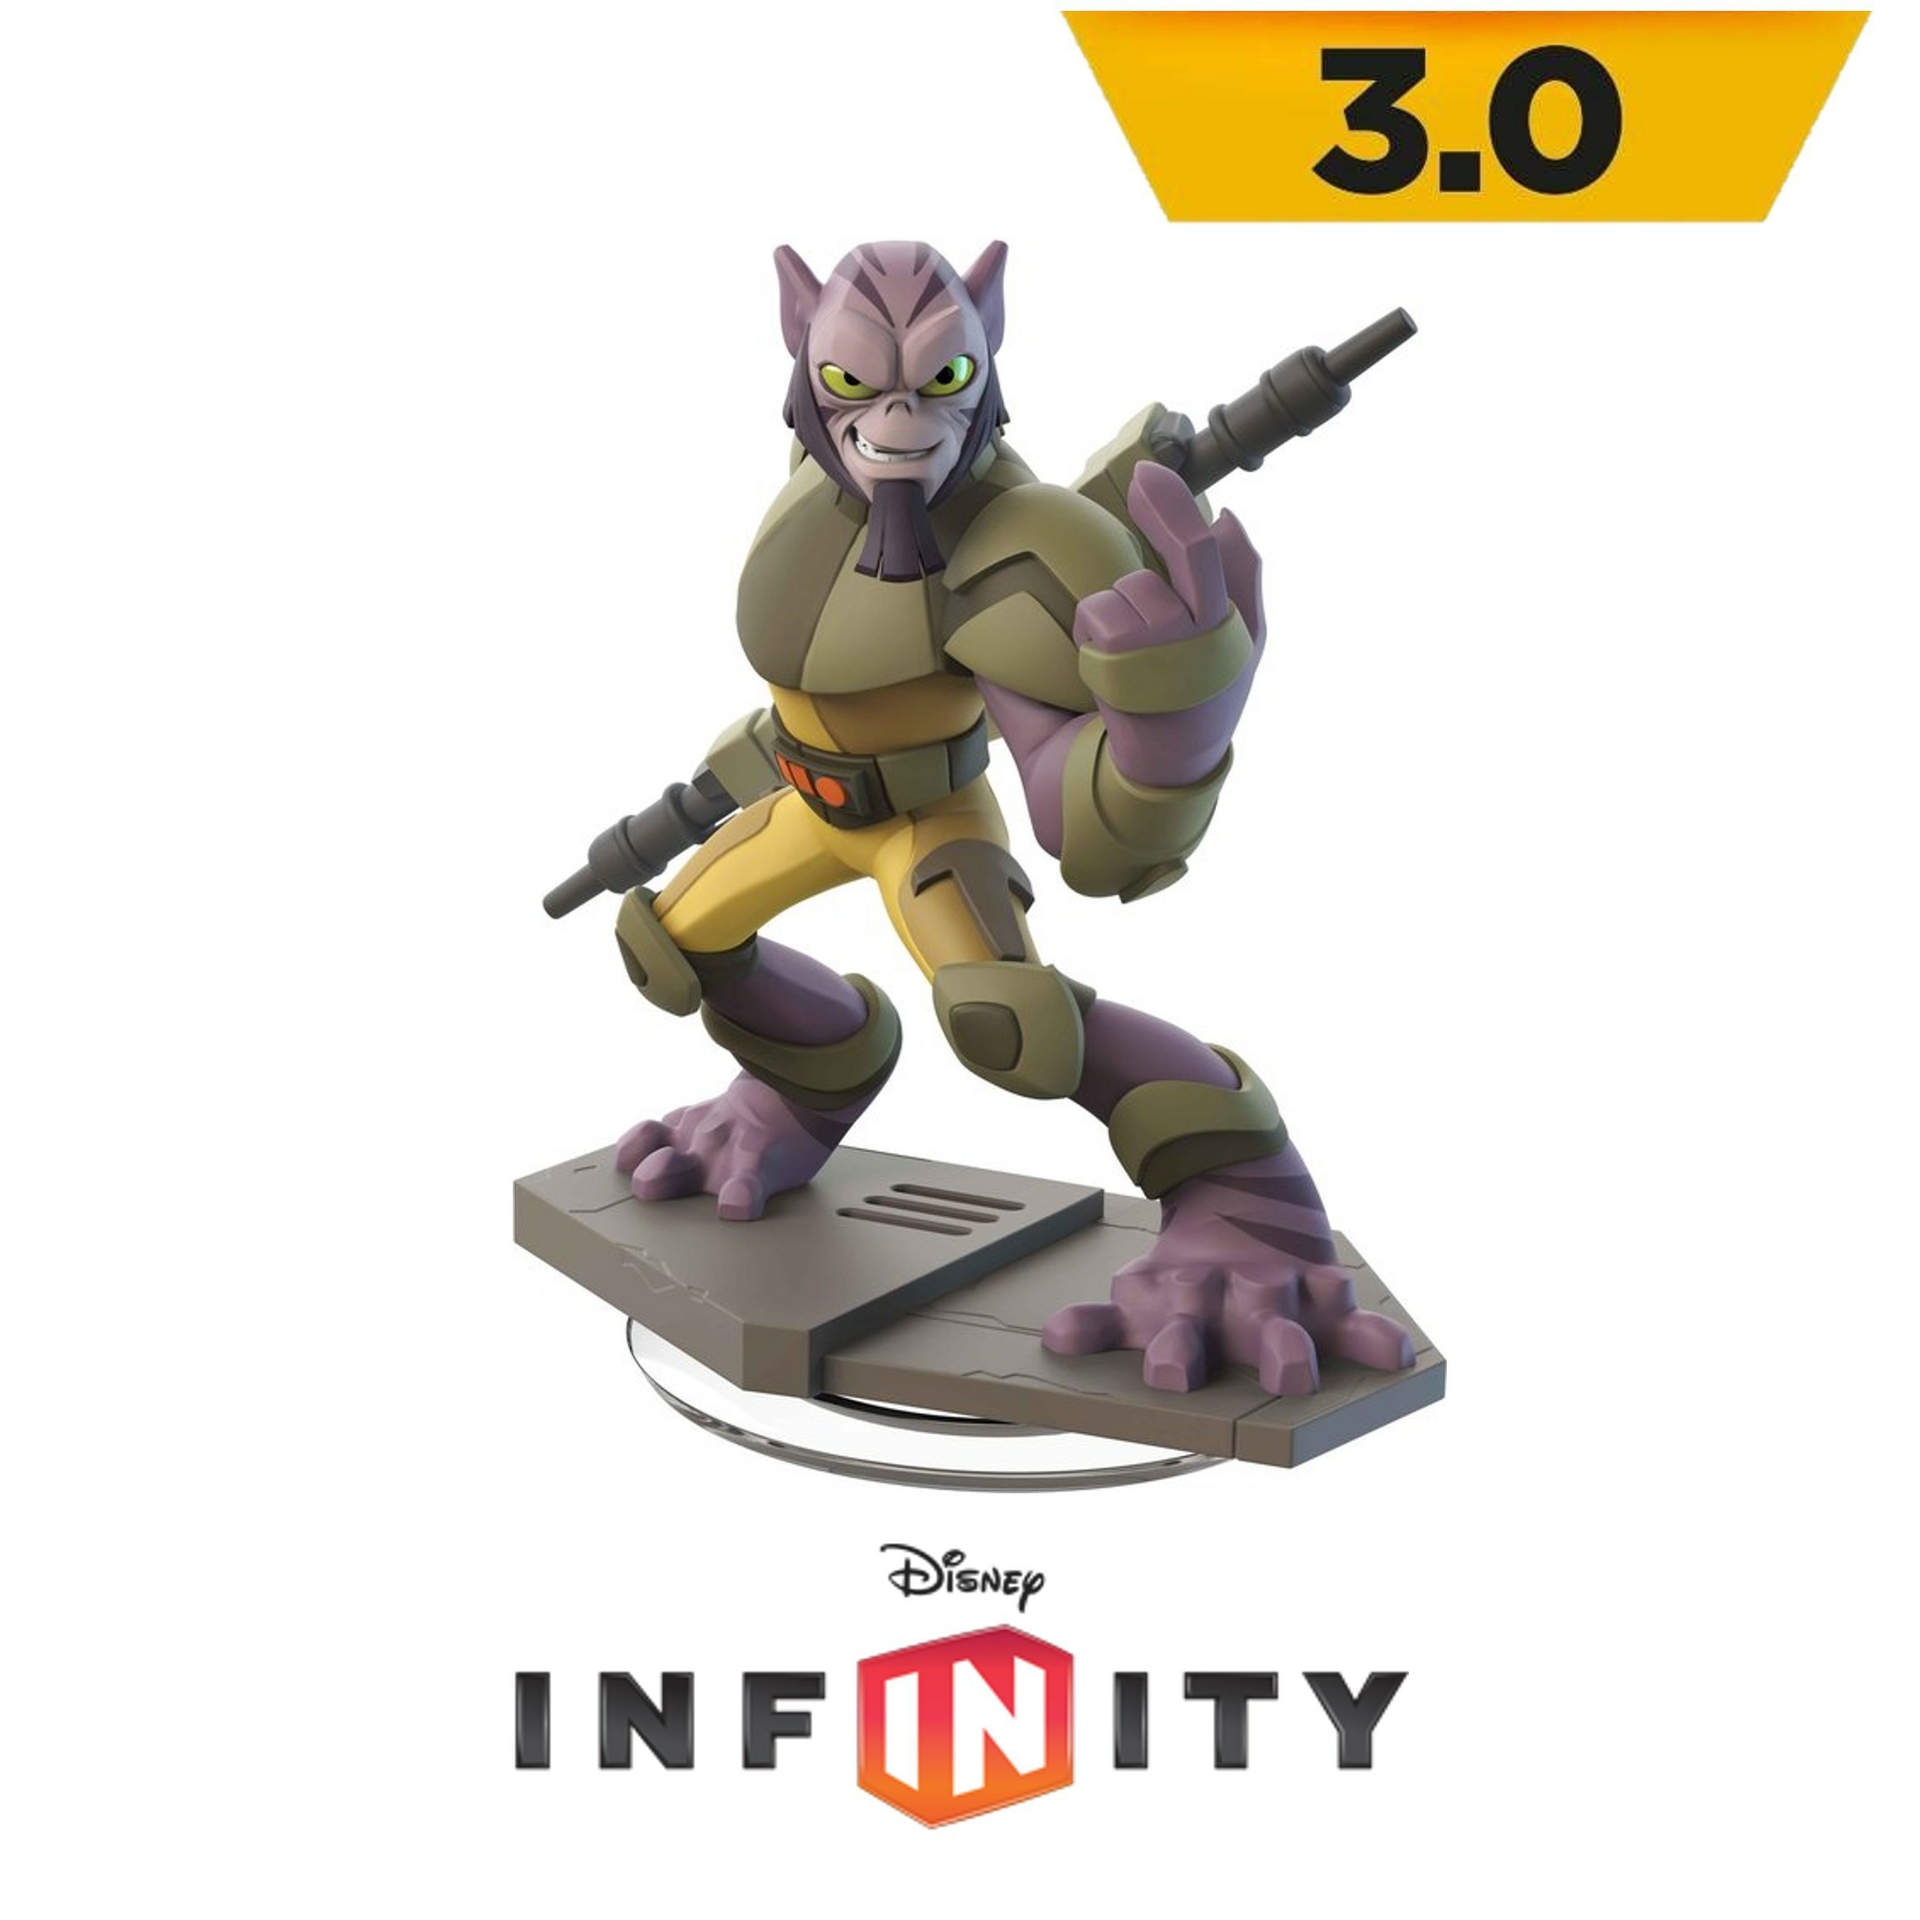 Disney Infinity - Zeb Orrelios - Playstation 3 Hardware